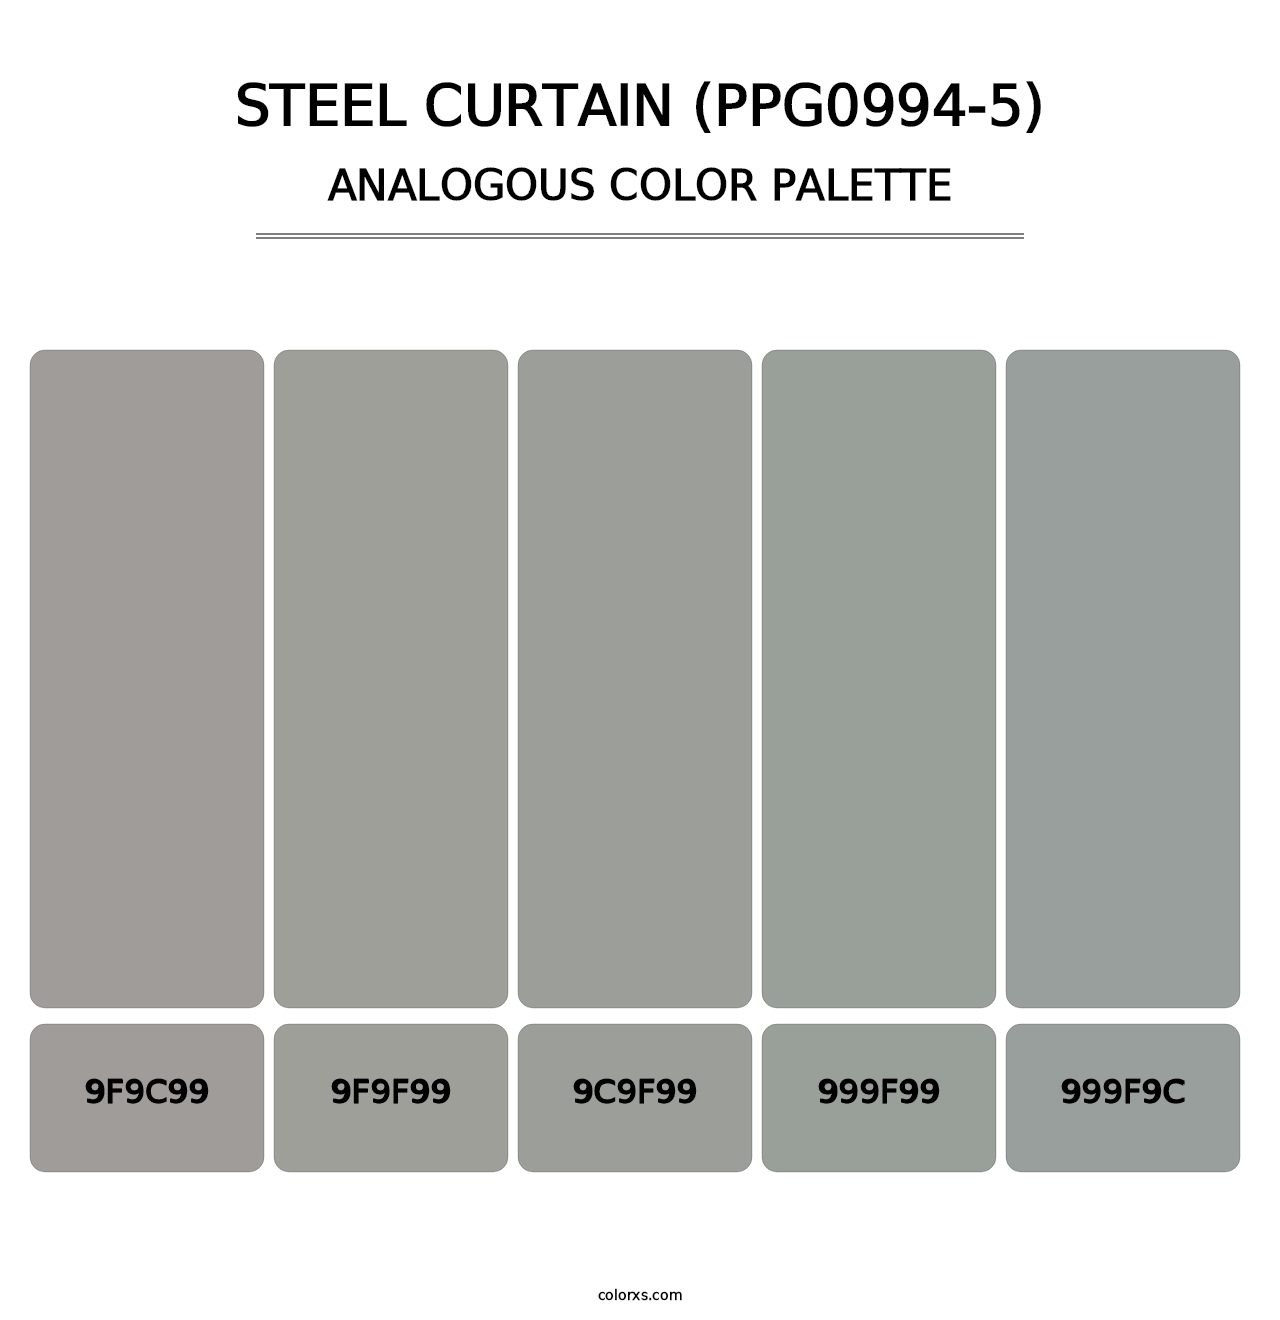 Steel Curtain (PPG0994-5) - Analogous Color Palette